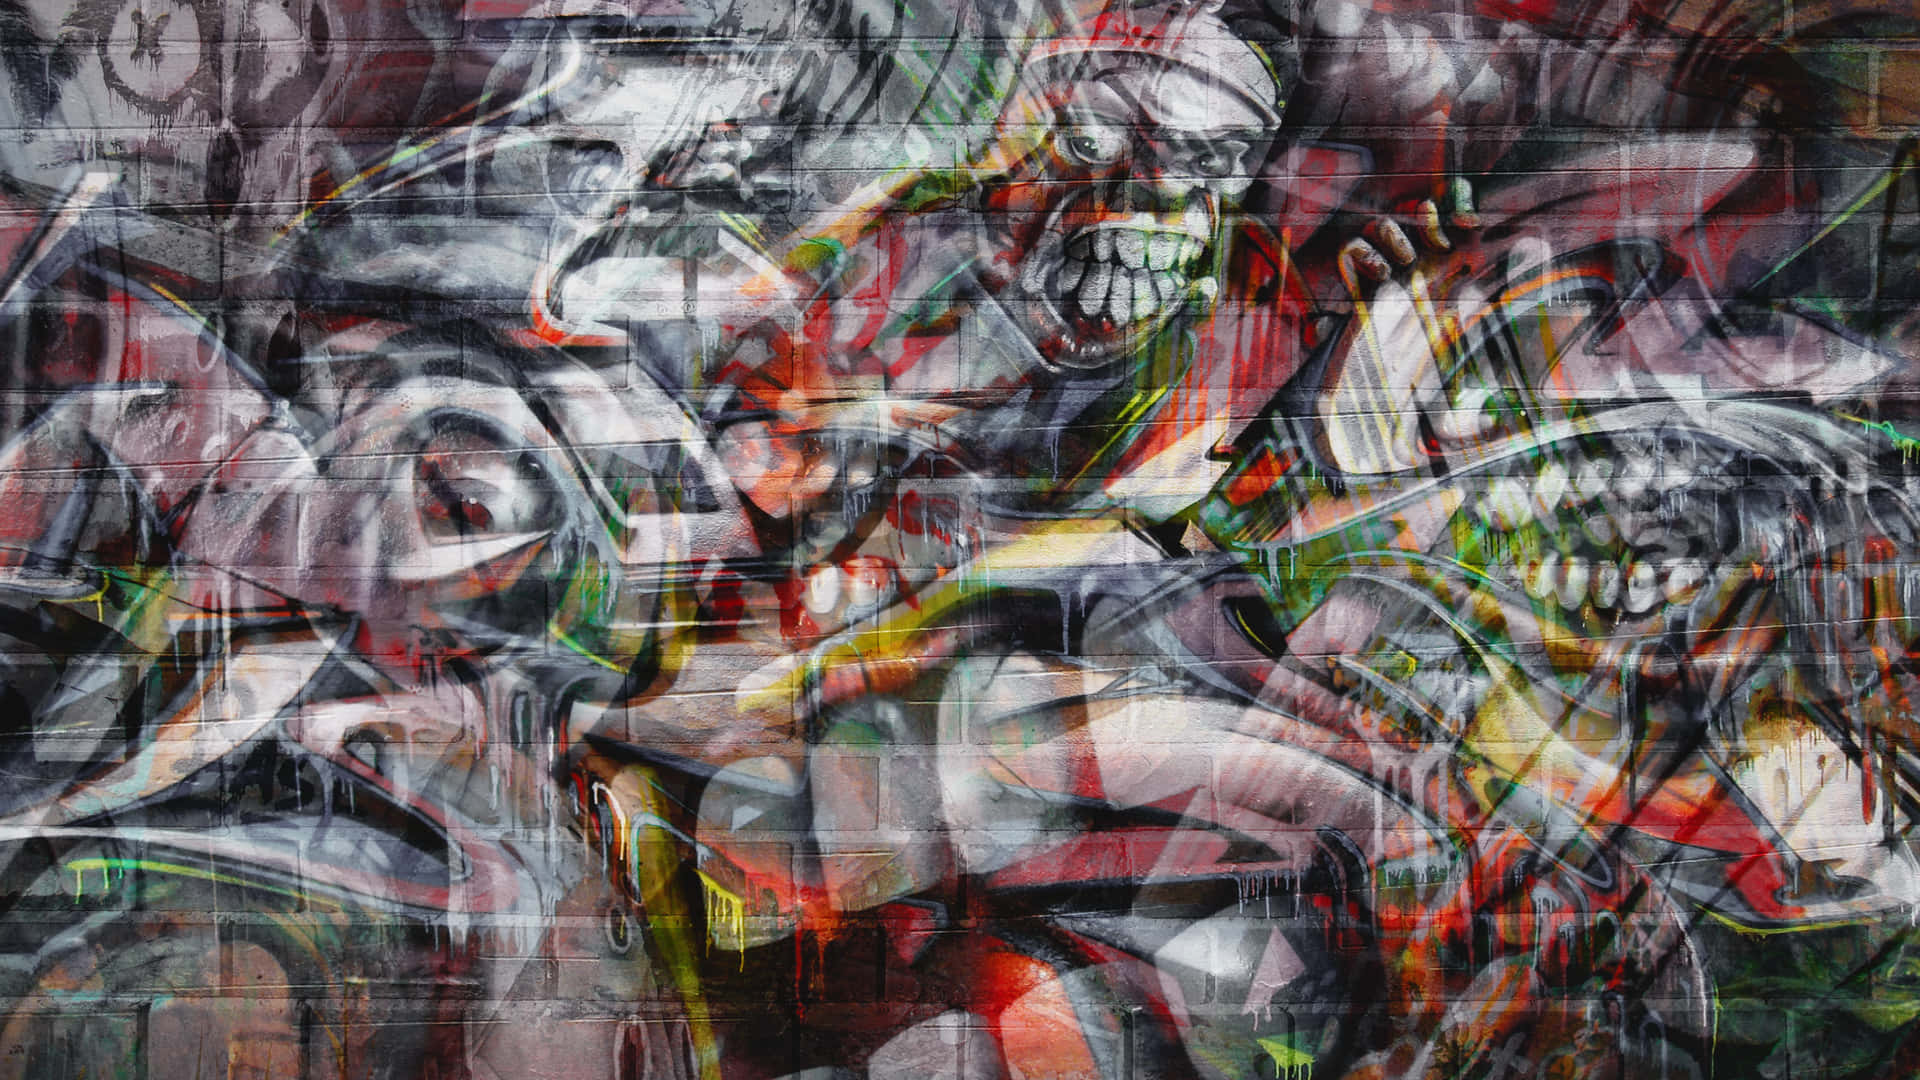 Graffiti Wall Art With Overlapping Patterns Background